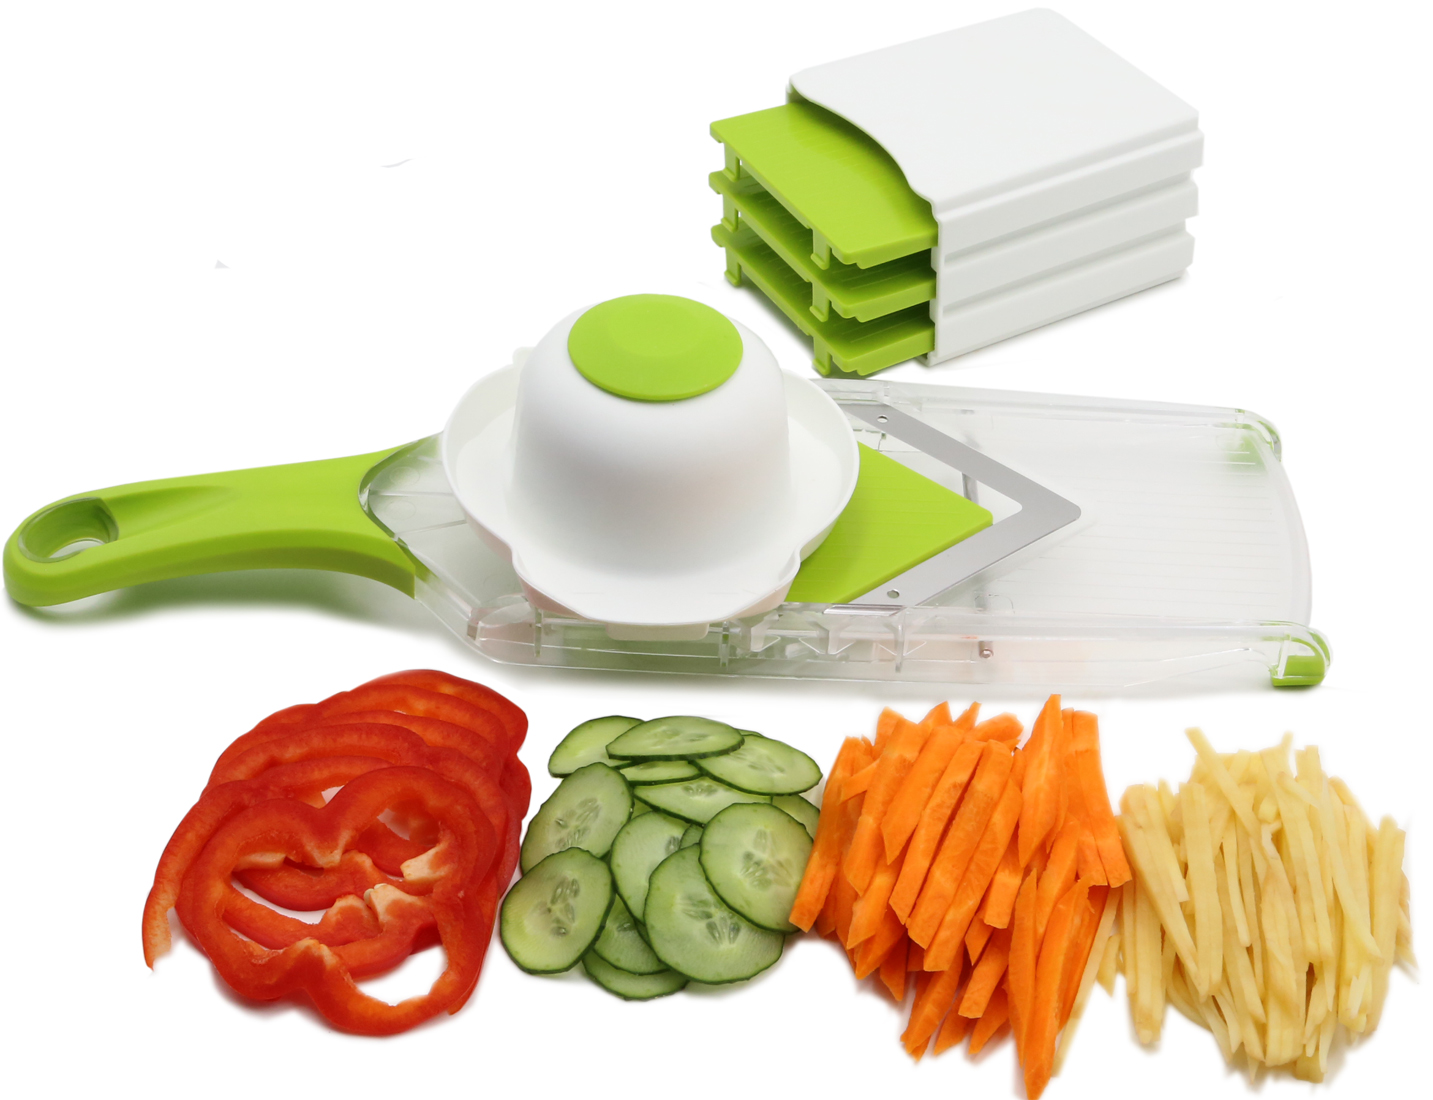  HOUKAI Mandoline Slicer for, for Vegetables Cutting